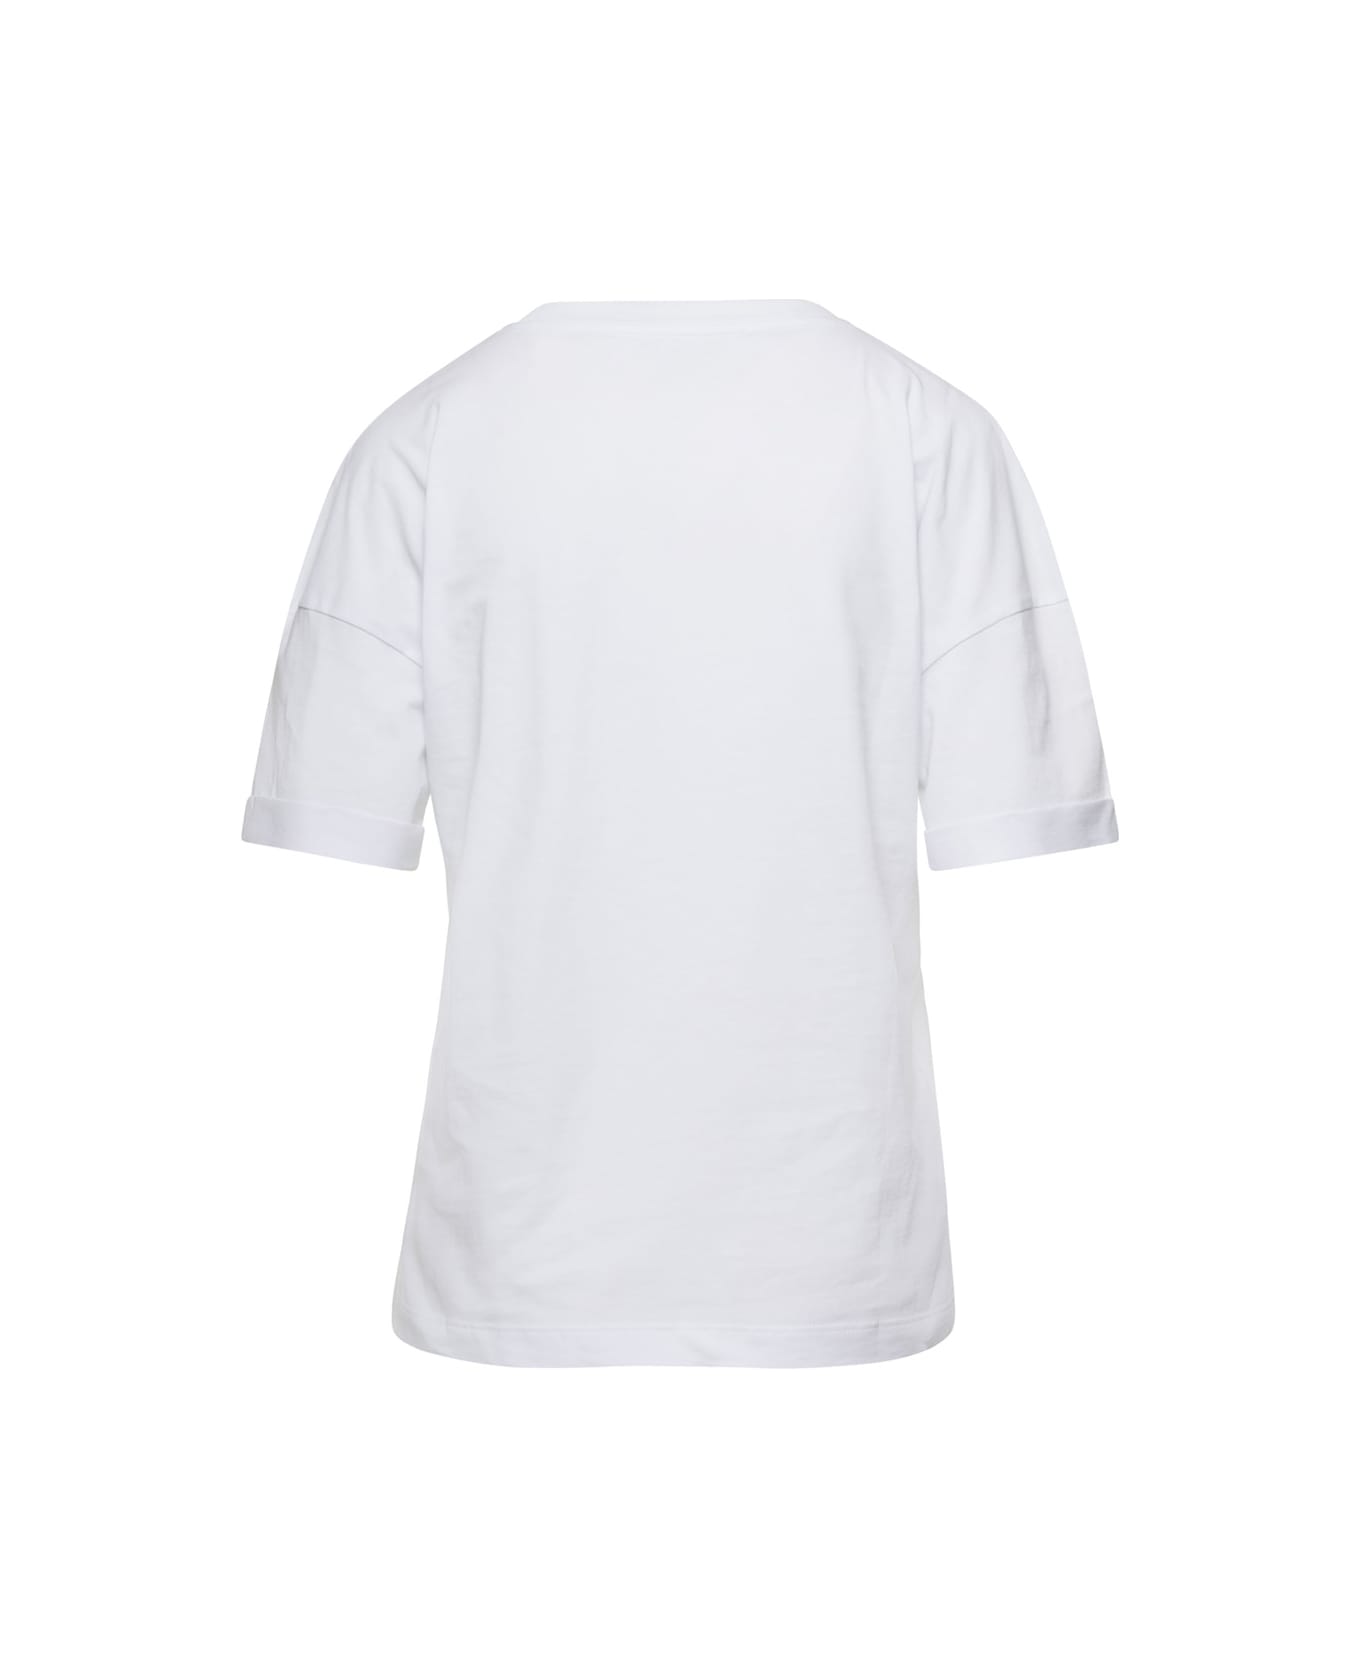 Federica Tosi White Crewneck T-shirt In Cotton Woman - White